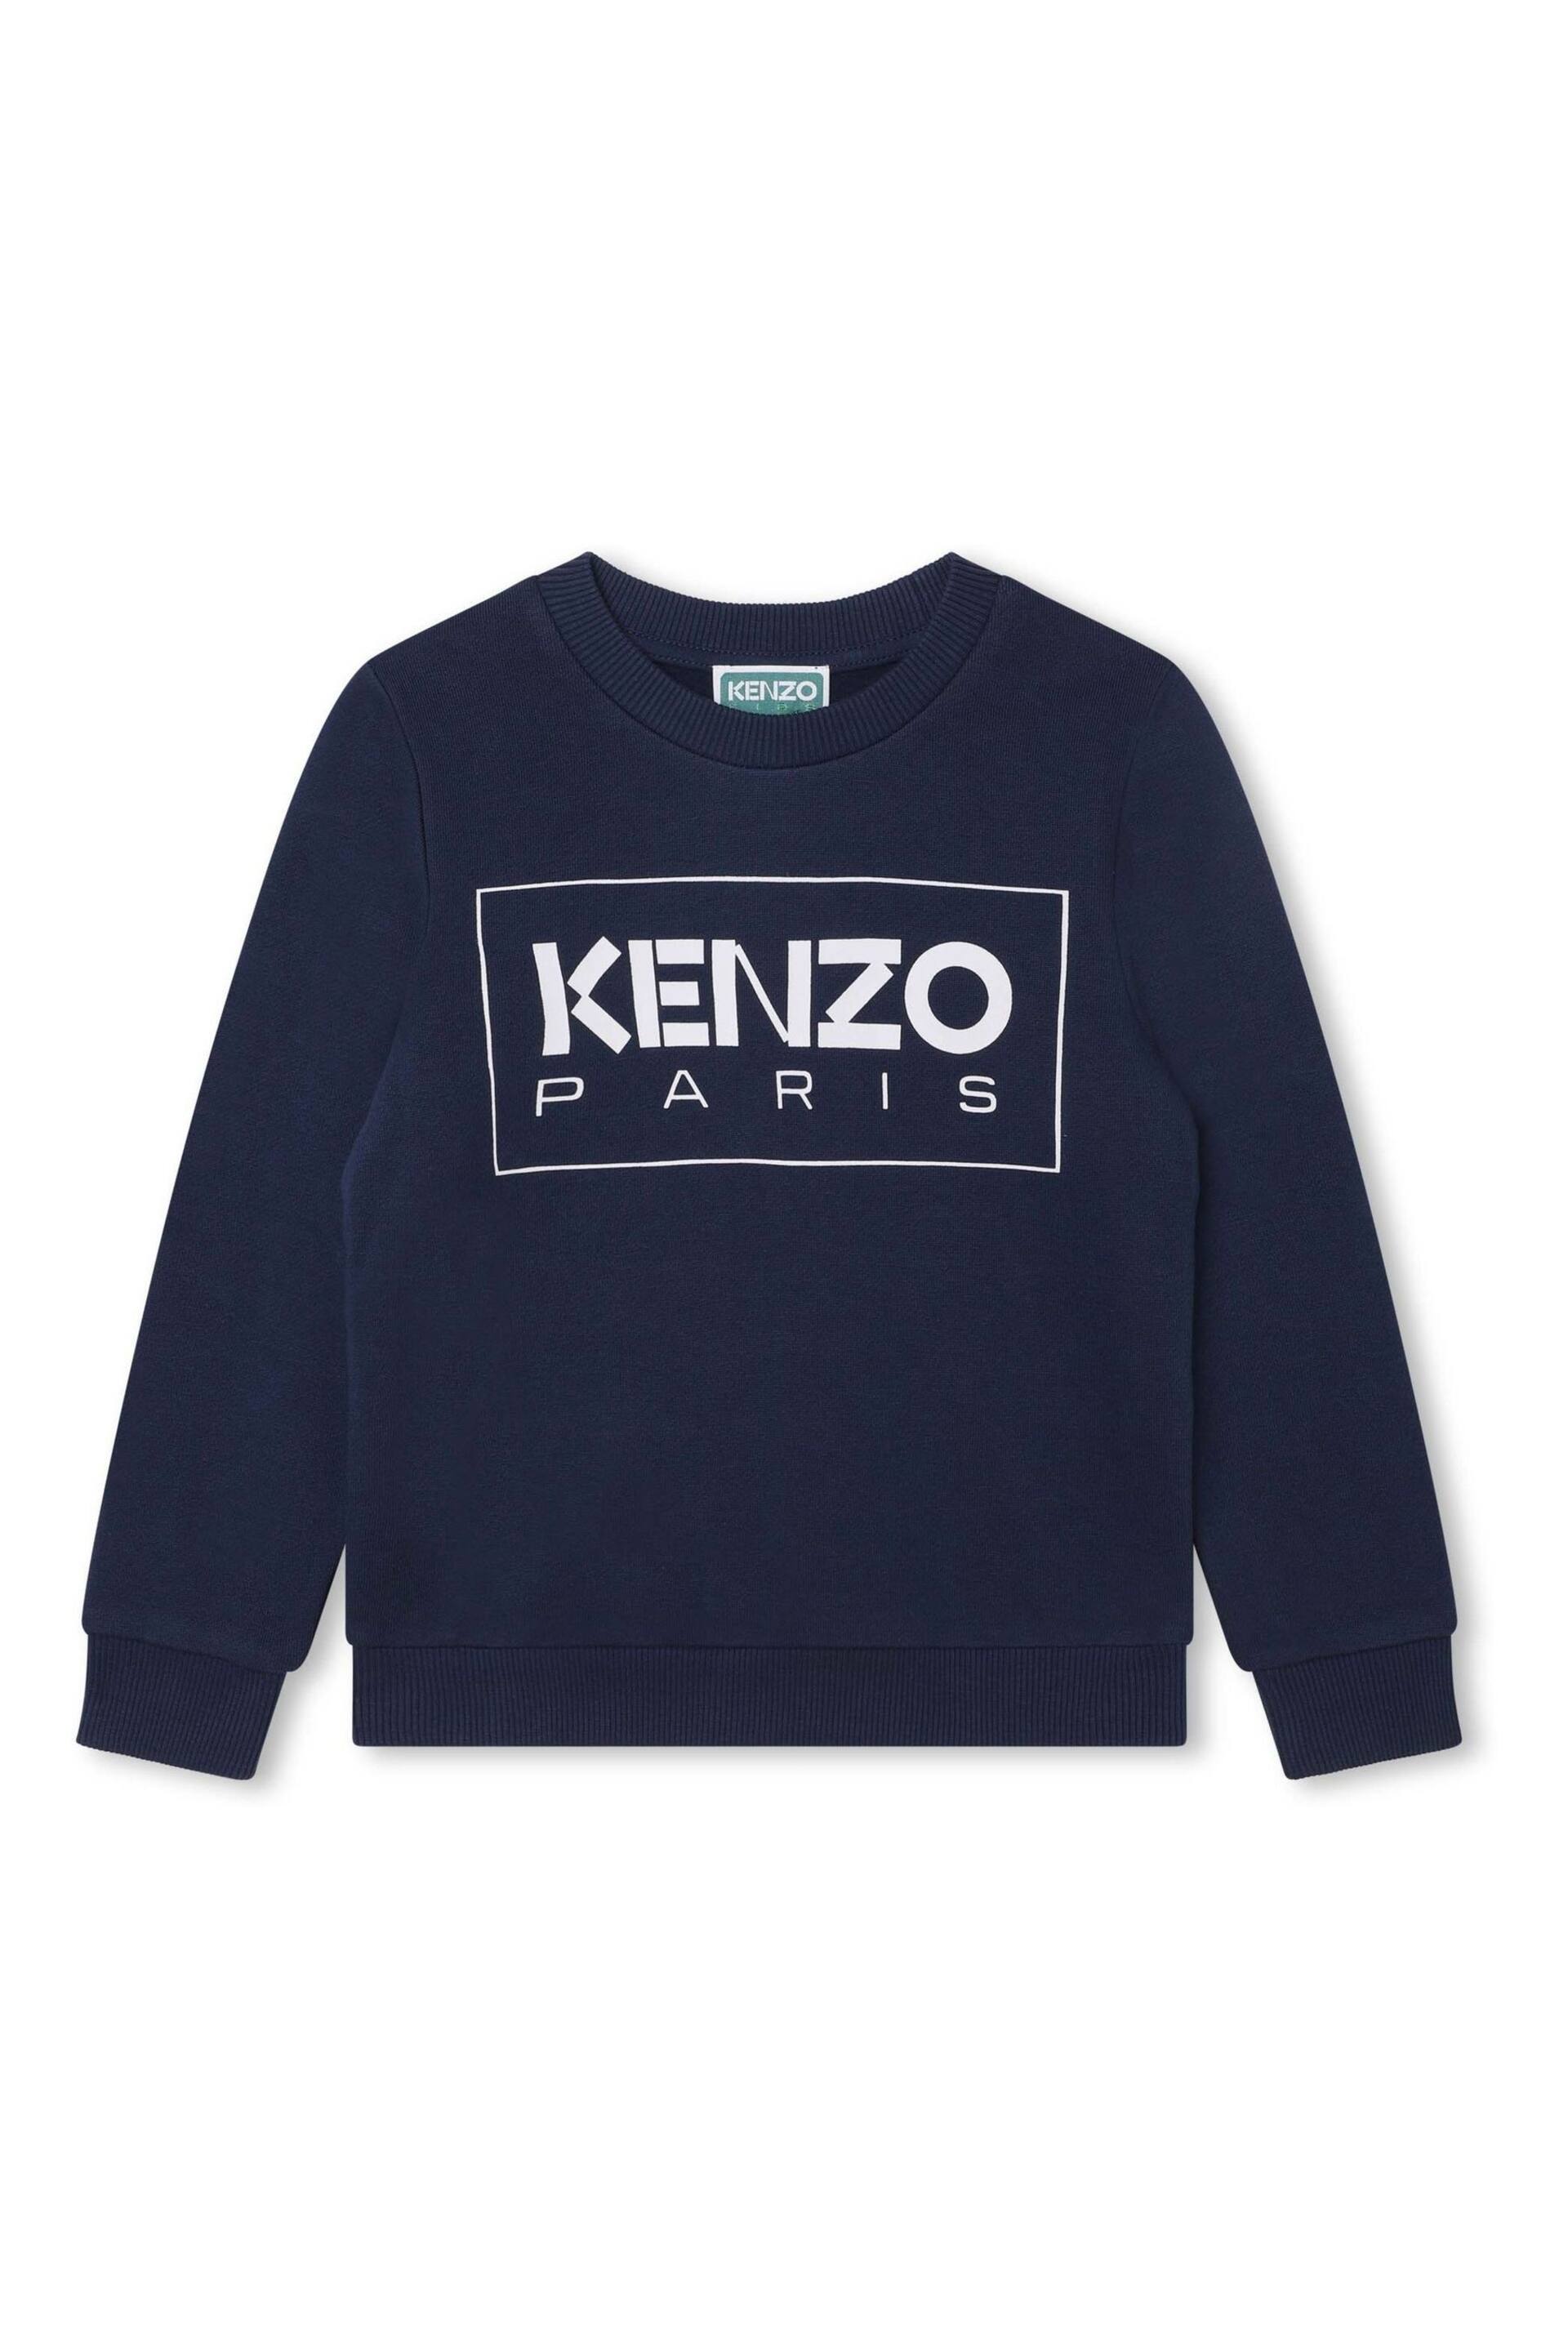 KENZO KIDS Navy Blue Logo Sweatshirt - Image 1 of 3